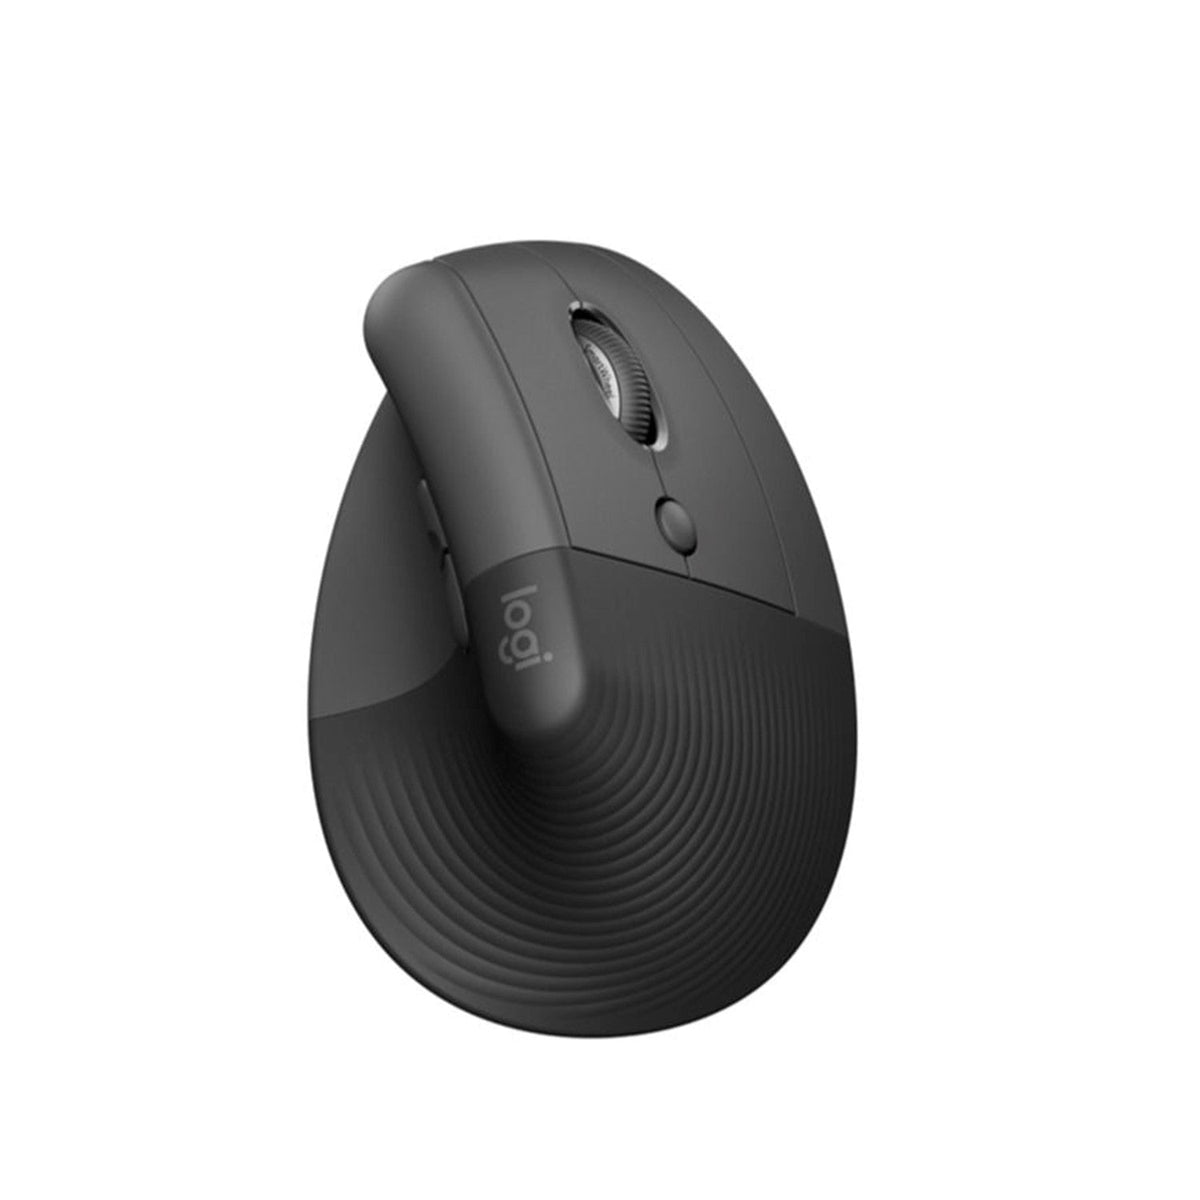 Logitech Lift Vertical Ergonomic Wireless Bluetooth Mouse Graphite